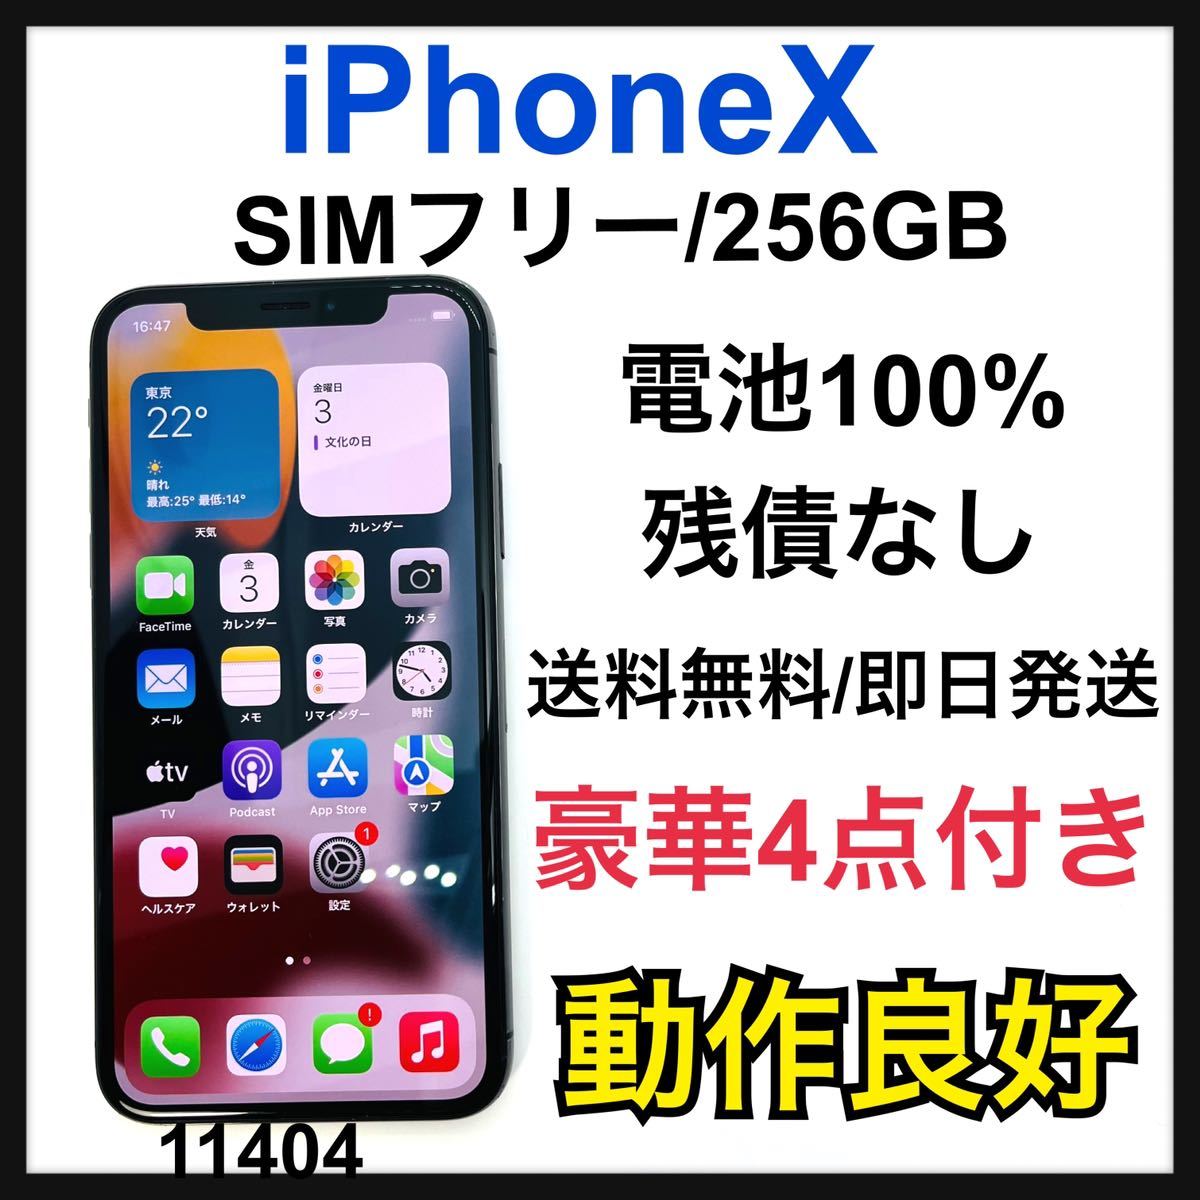 100% iPhone X Space Gray 256 GB SIMフリー-